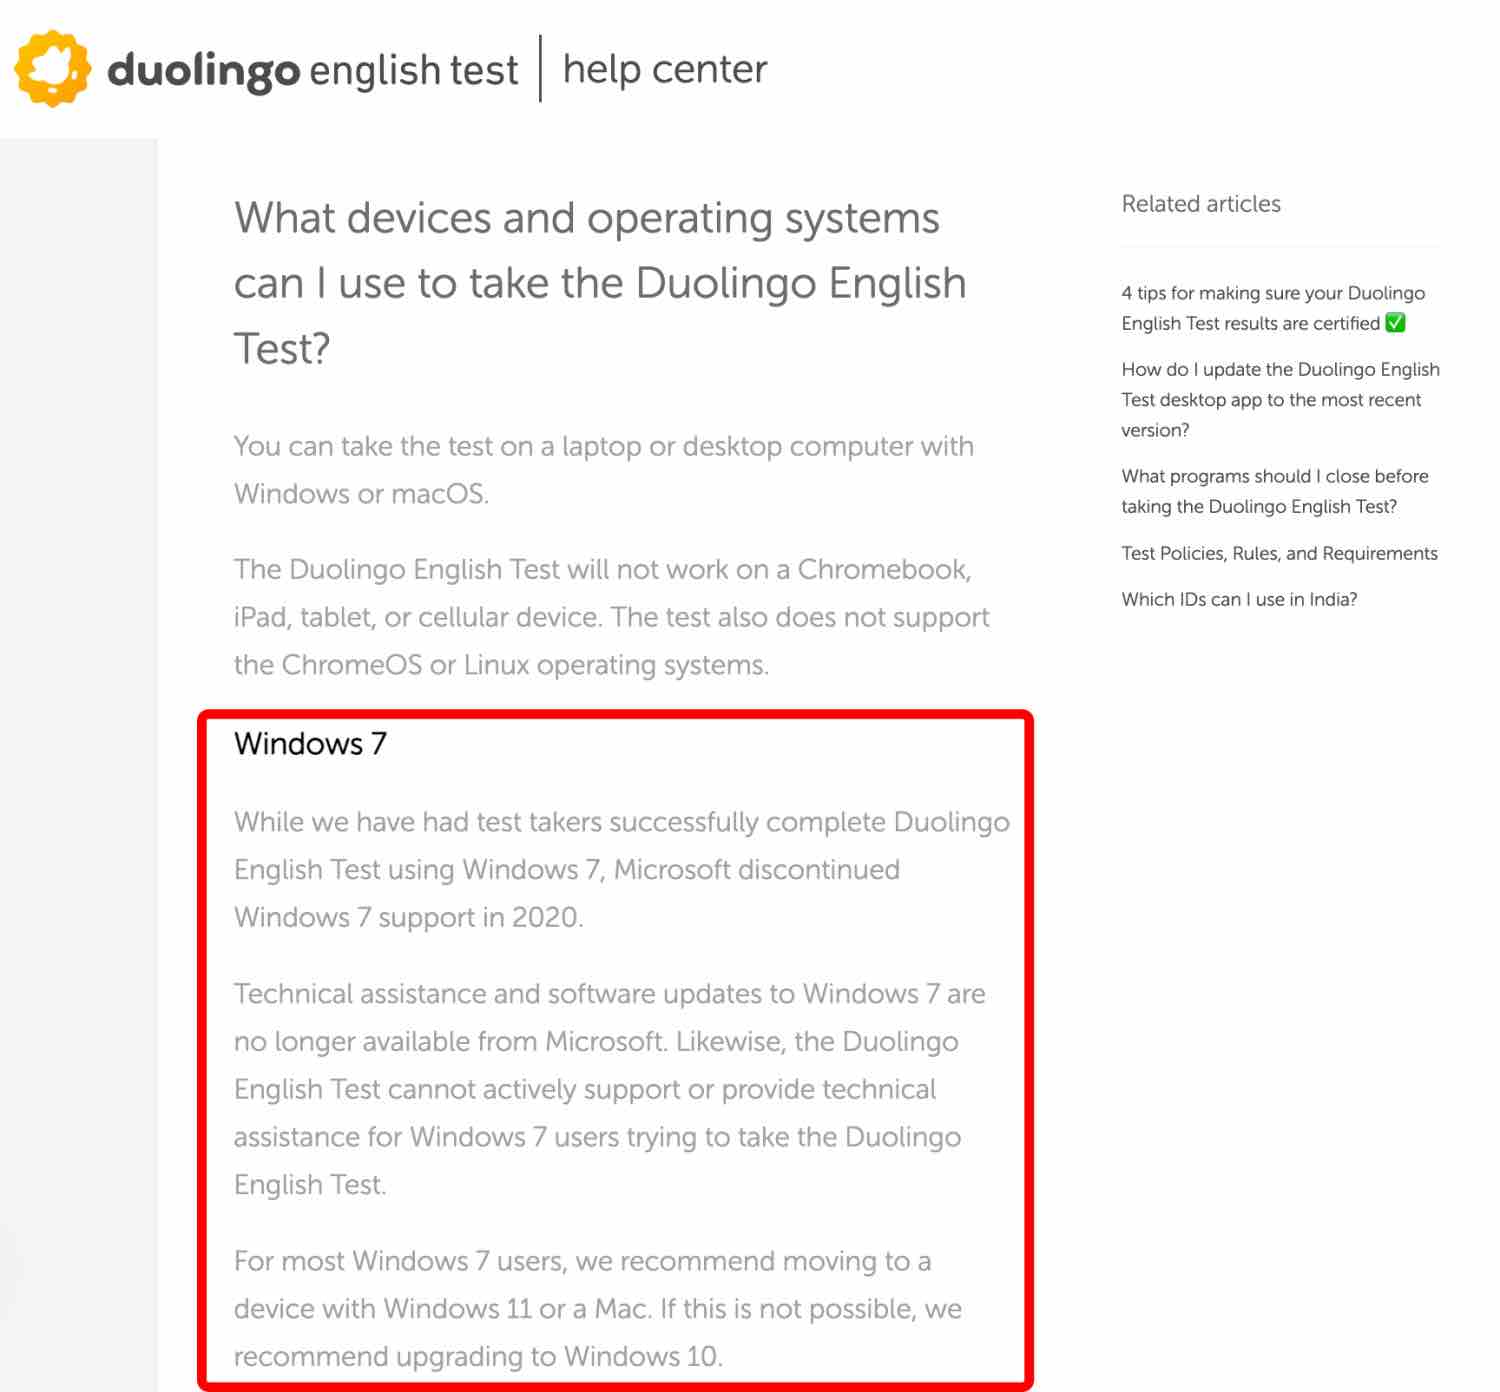 DET window 7, Duolingo English Test, DET frequently asked questions, DET Practice Website, DET Preparation materials